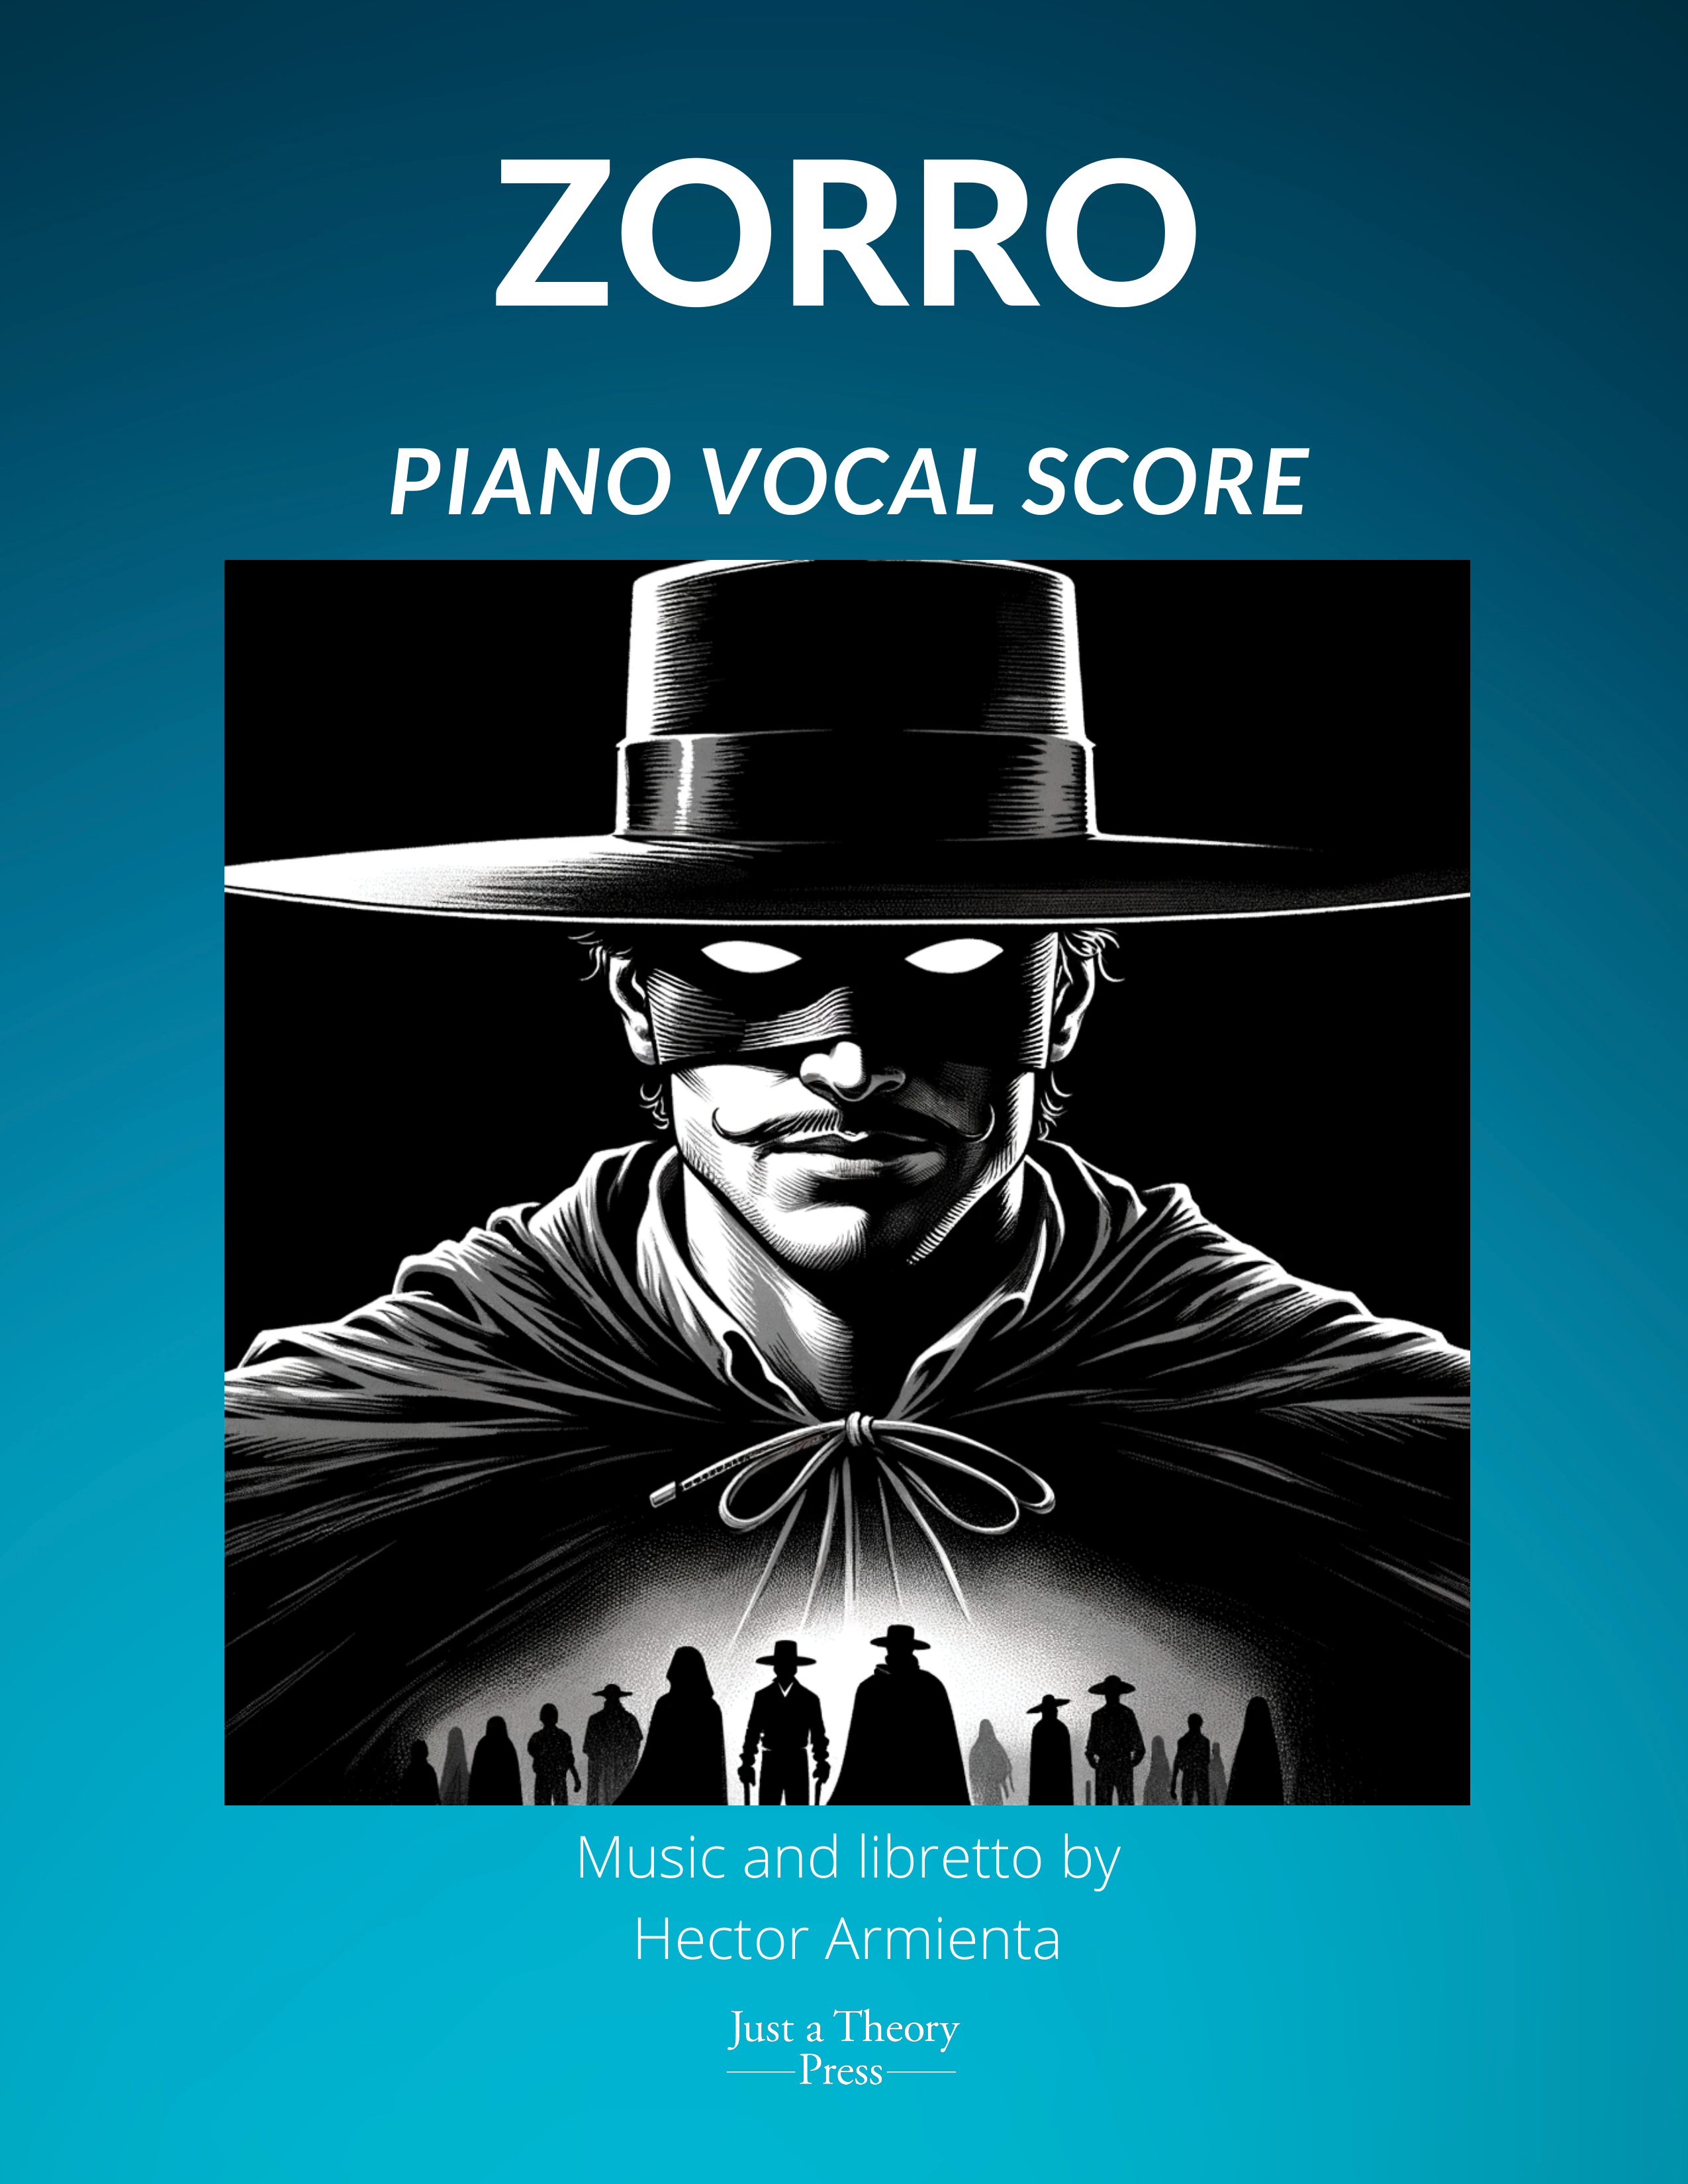 Zorro: The Opera